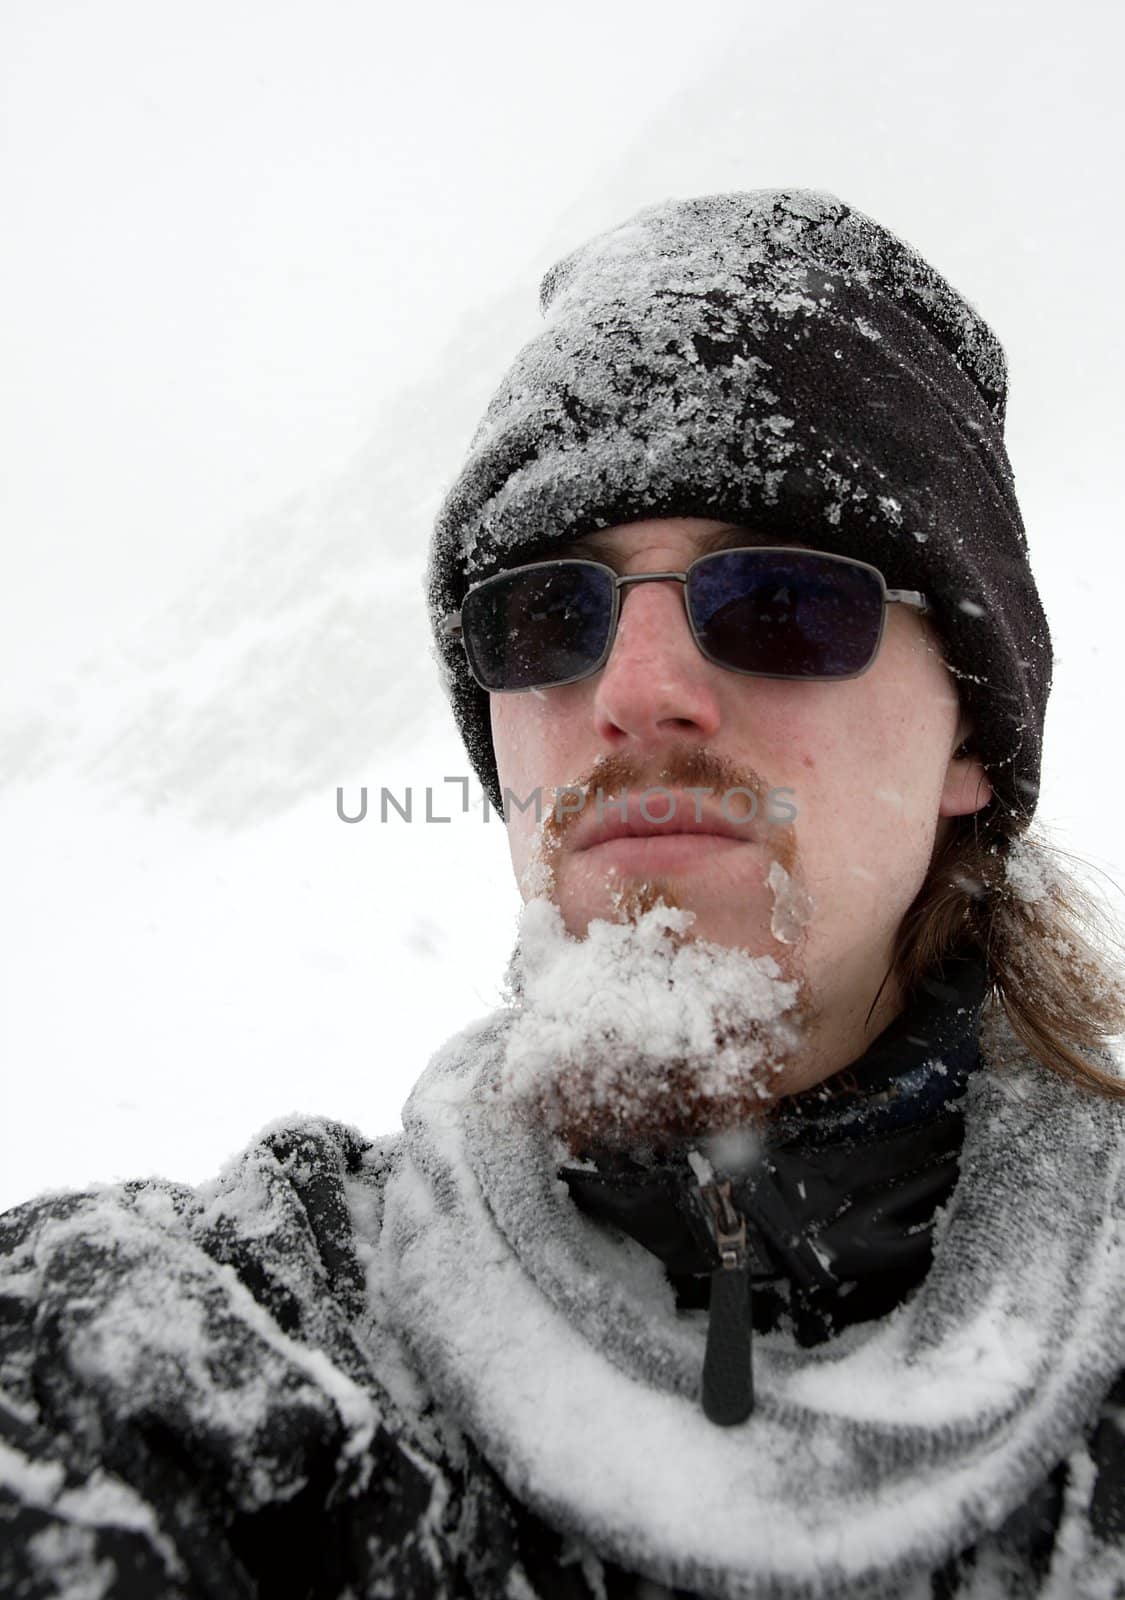 Man in a blizzard with frozen beard